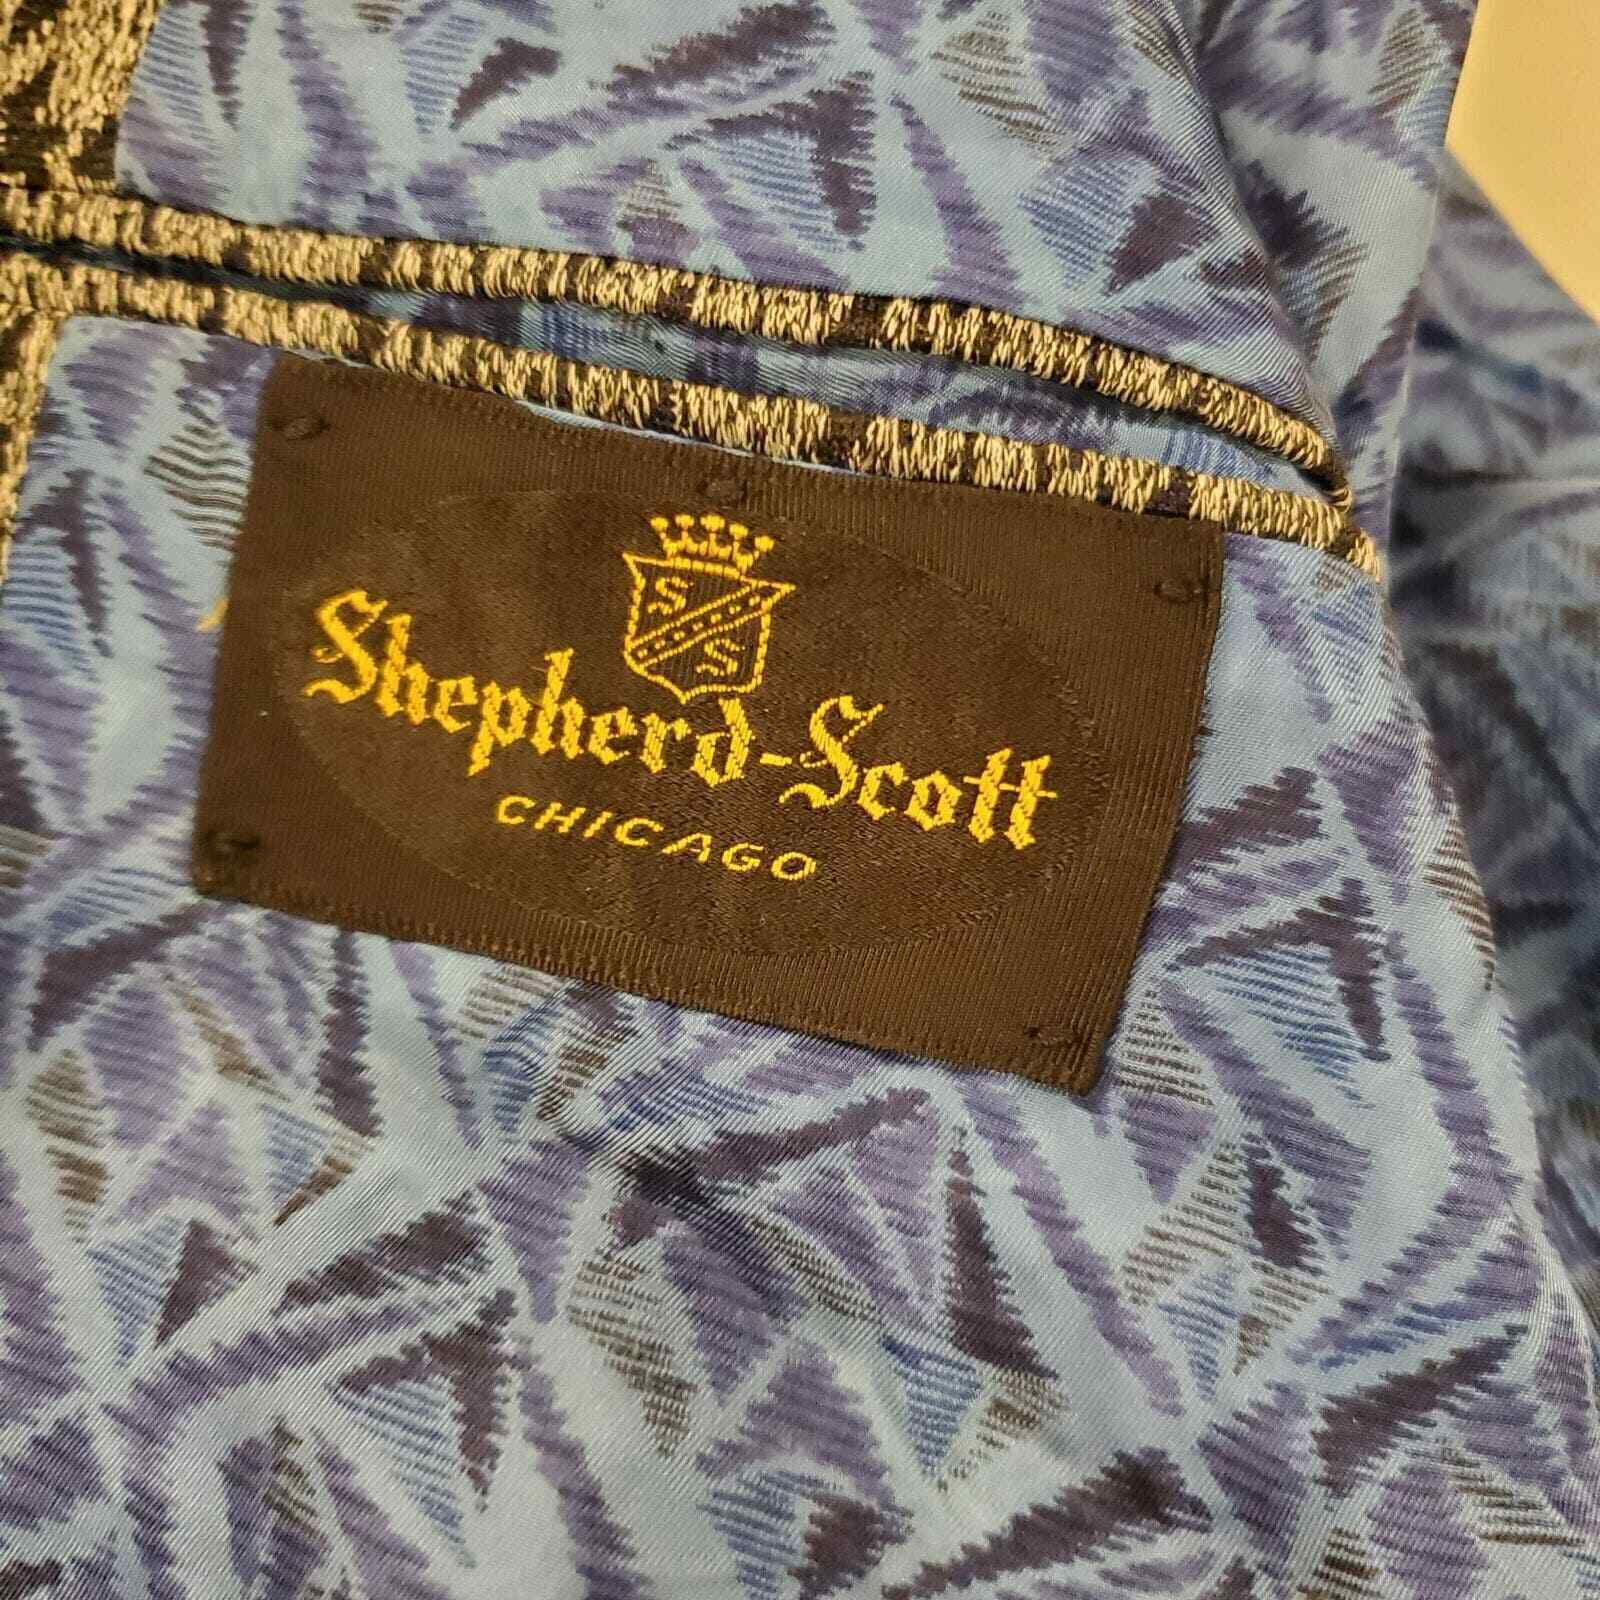 Shepherd-Scott Chicago Men's Gray Houndstooth Pattern Blazer